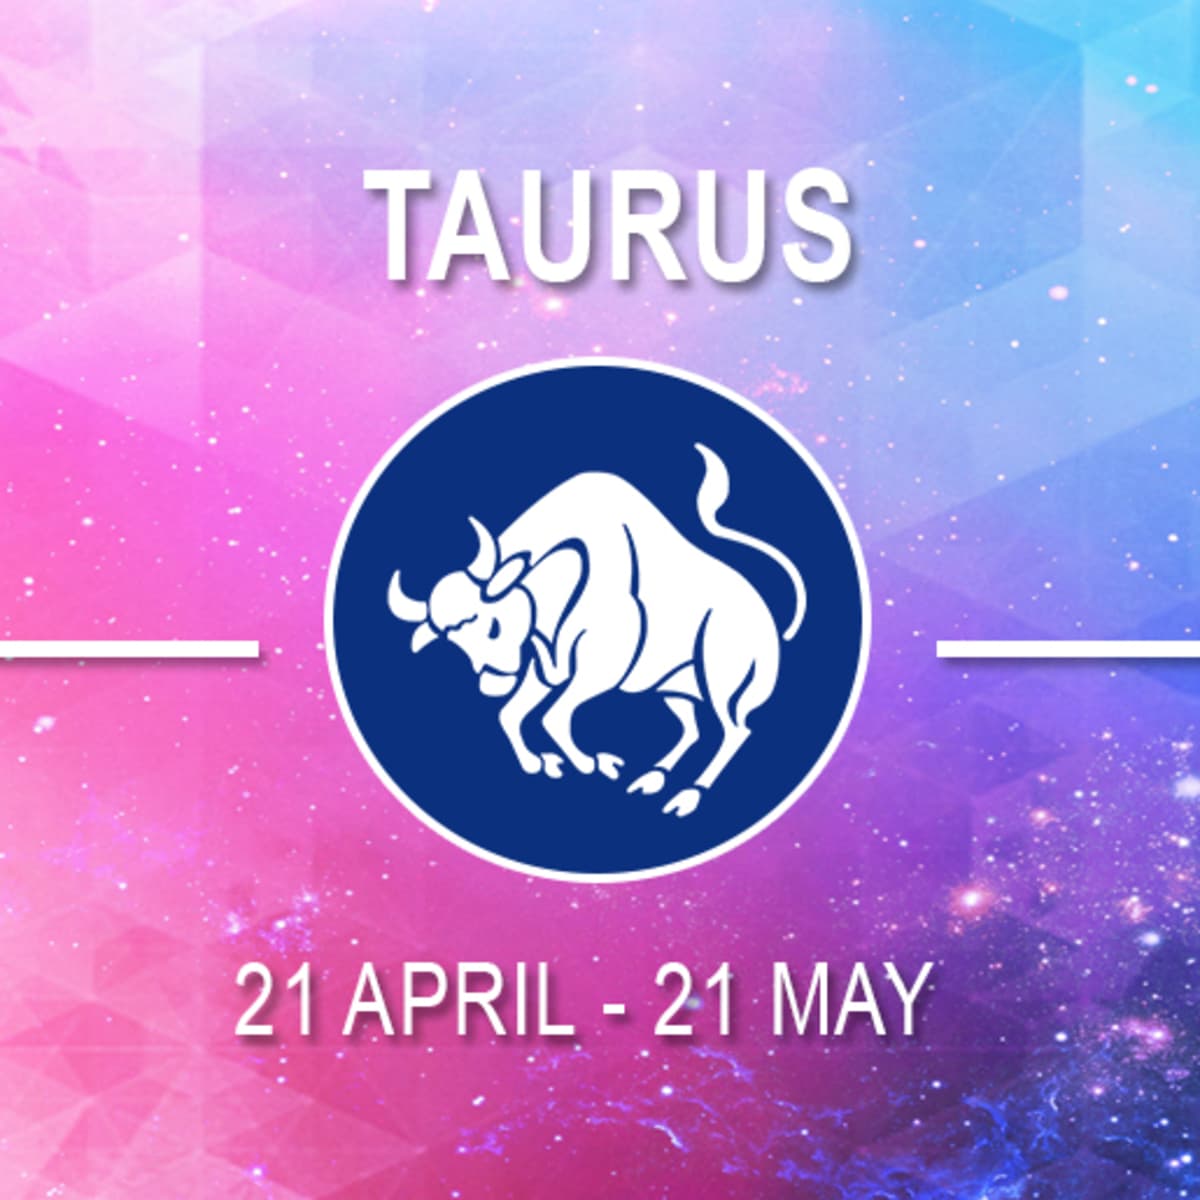 Taurus strongest sign